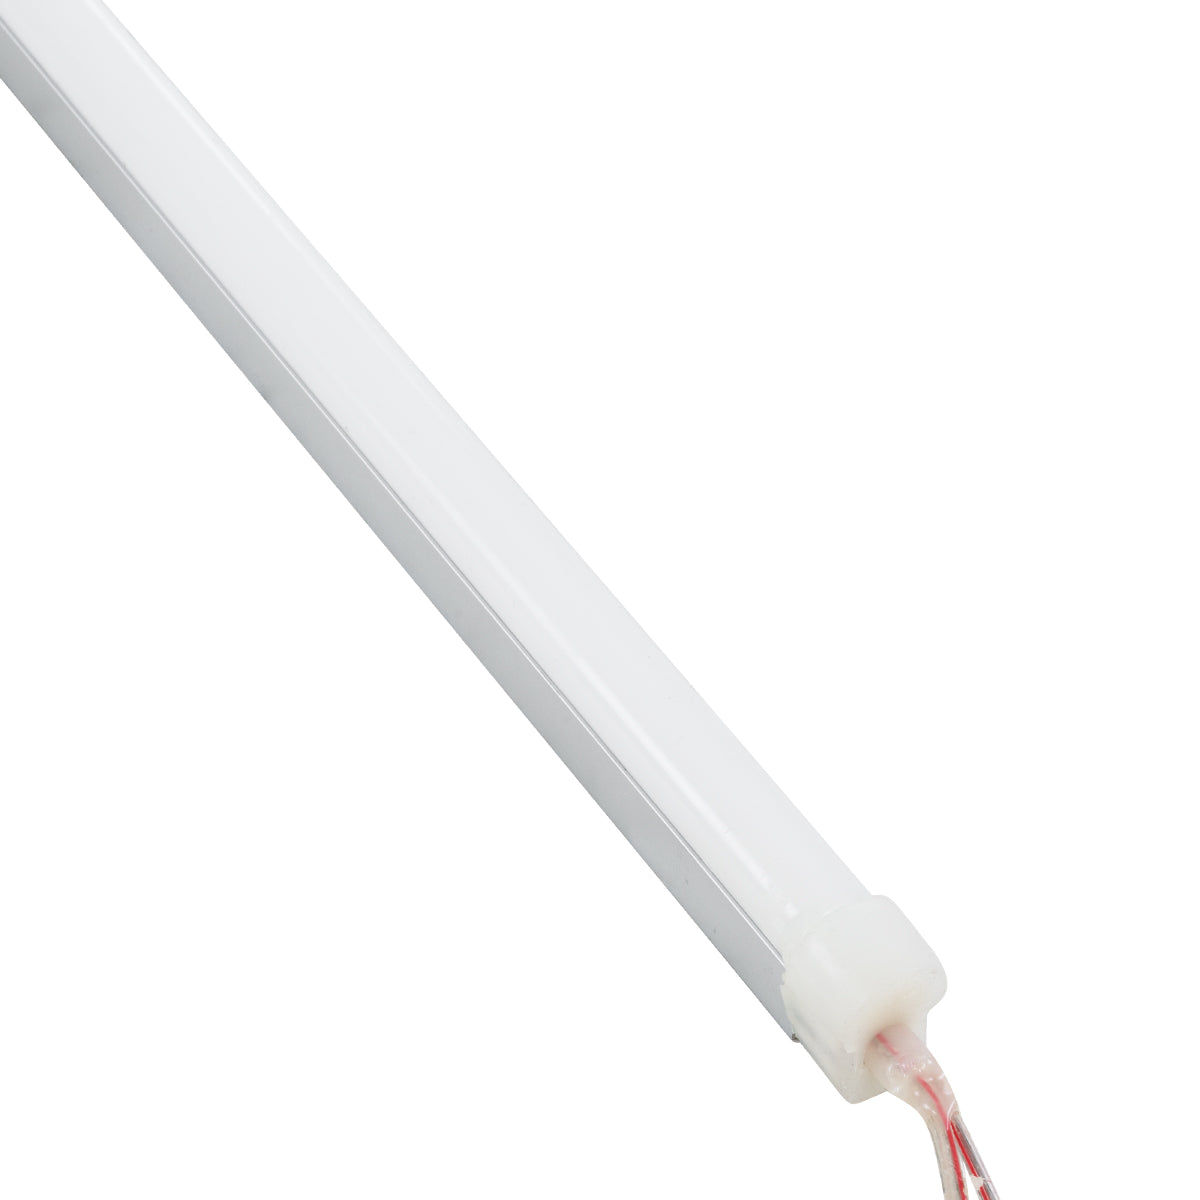 GloboStar® CON-NEONIO 90774 Προφίλ Αλουμινίου 3 Μέτρων - Βάση Στήριξης για την NEONIO Digital Neon Flex LED 14.4W/m 12VDC με Π1 x Υ2.3cm - Ασημί - Μ300 x Π1.2 x Υ1.3cm